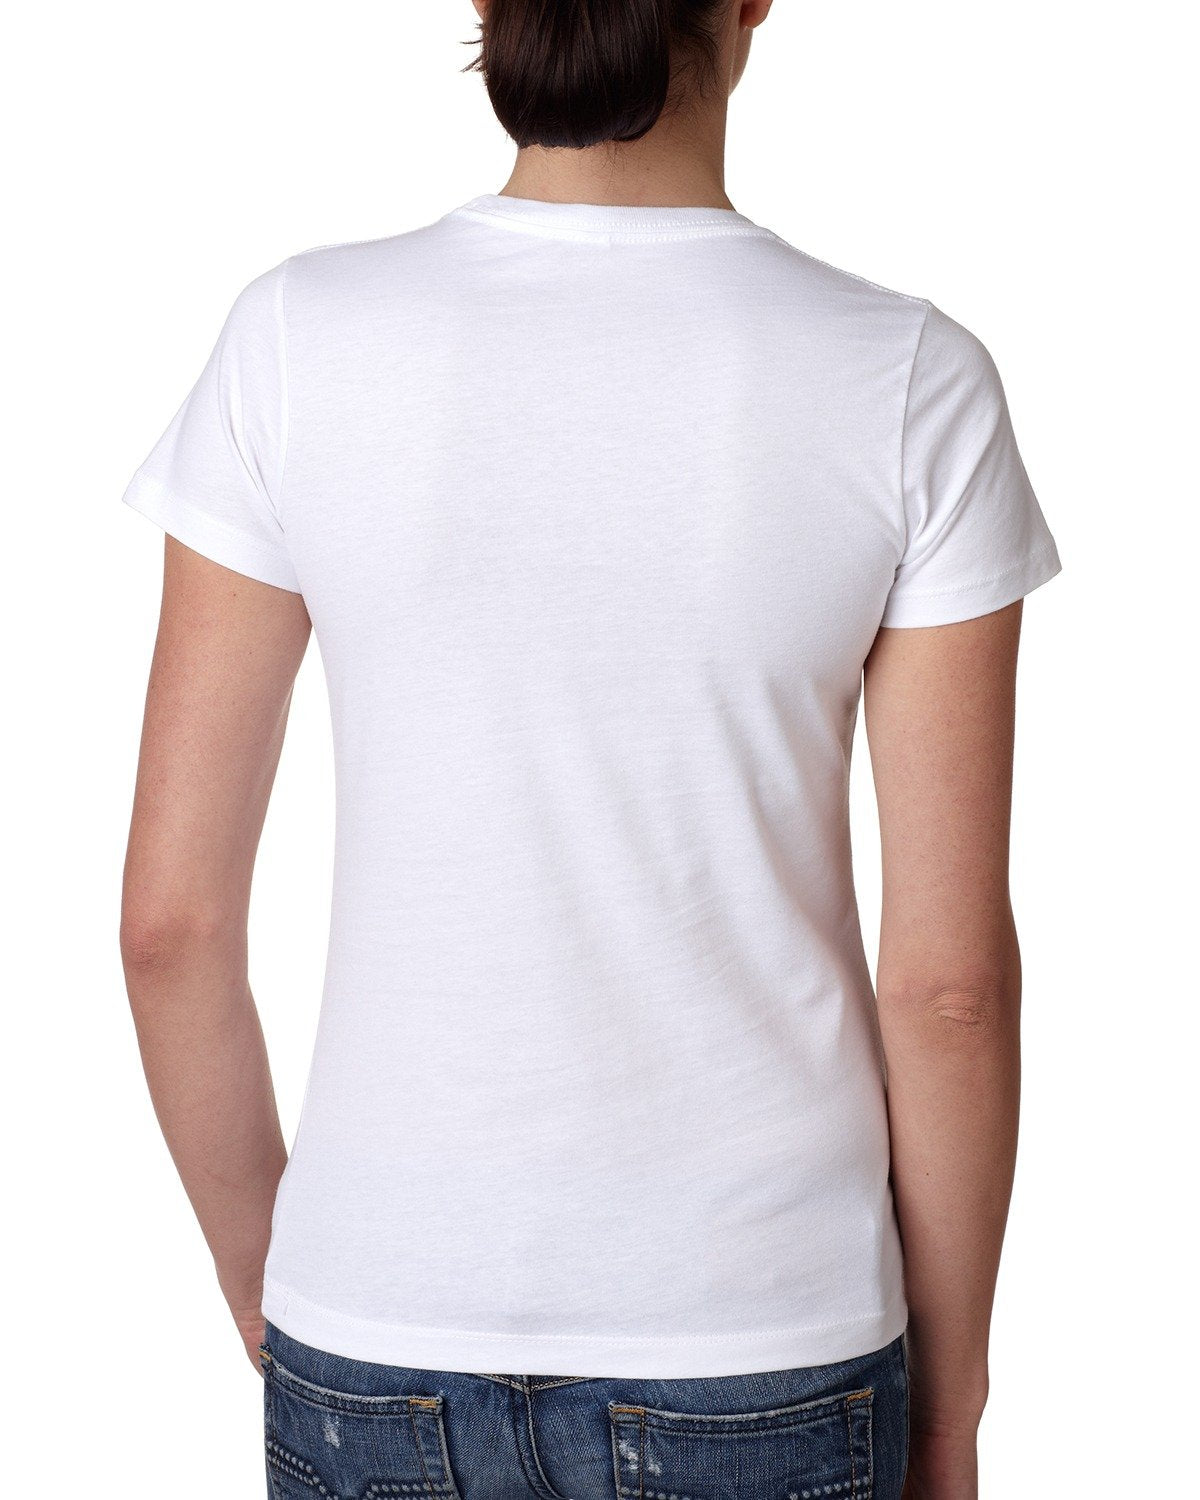 Next Level N3900 Ladies Boyfriend 4.3oz T-Shirt - Bulk Custom Shirts